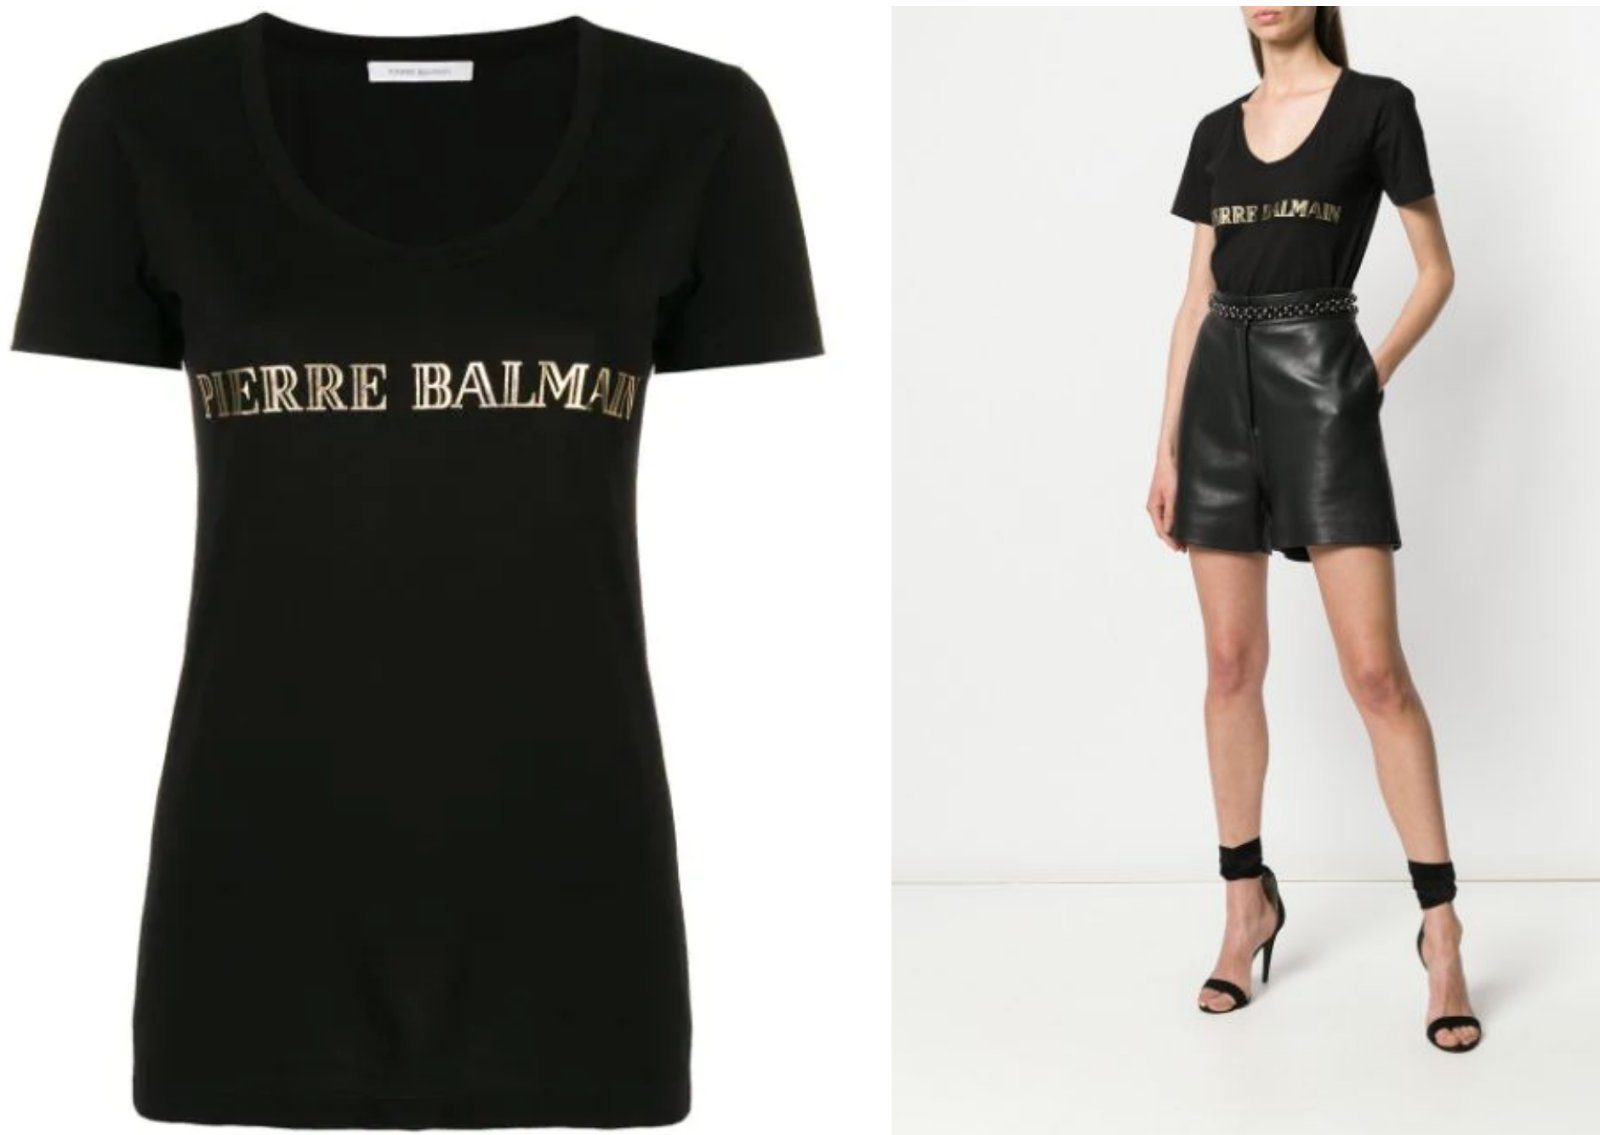 Balmain T-Shirt PIERRE BALMAIN LOGOSHIRT ICONIC BRAND LOGO CULT BLUSE ROCK TOP